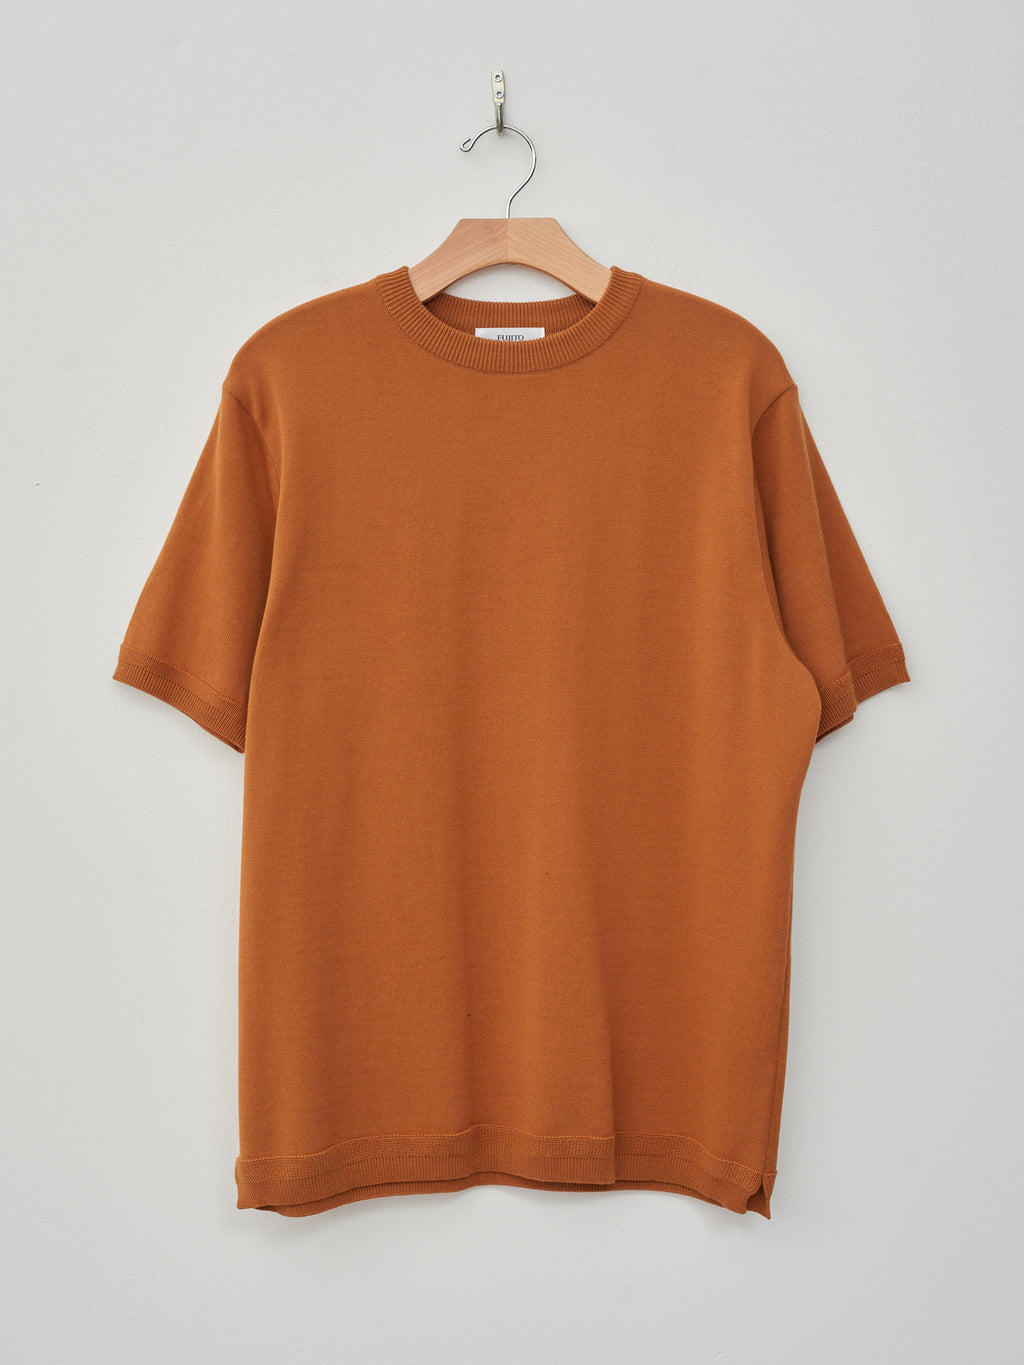 Namu Shop - Fujito C/N Knit T-Shirt - Brown Gold